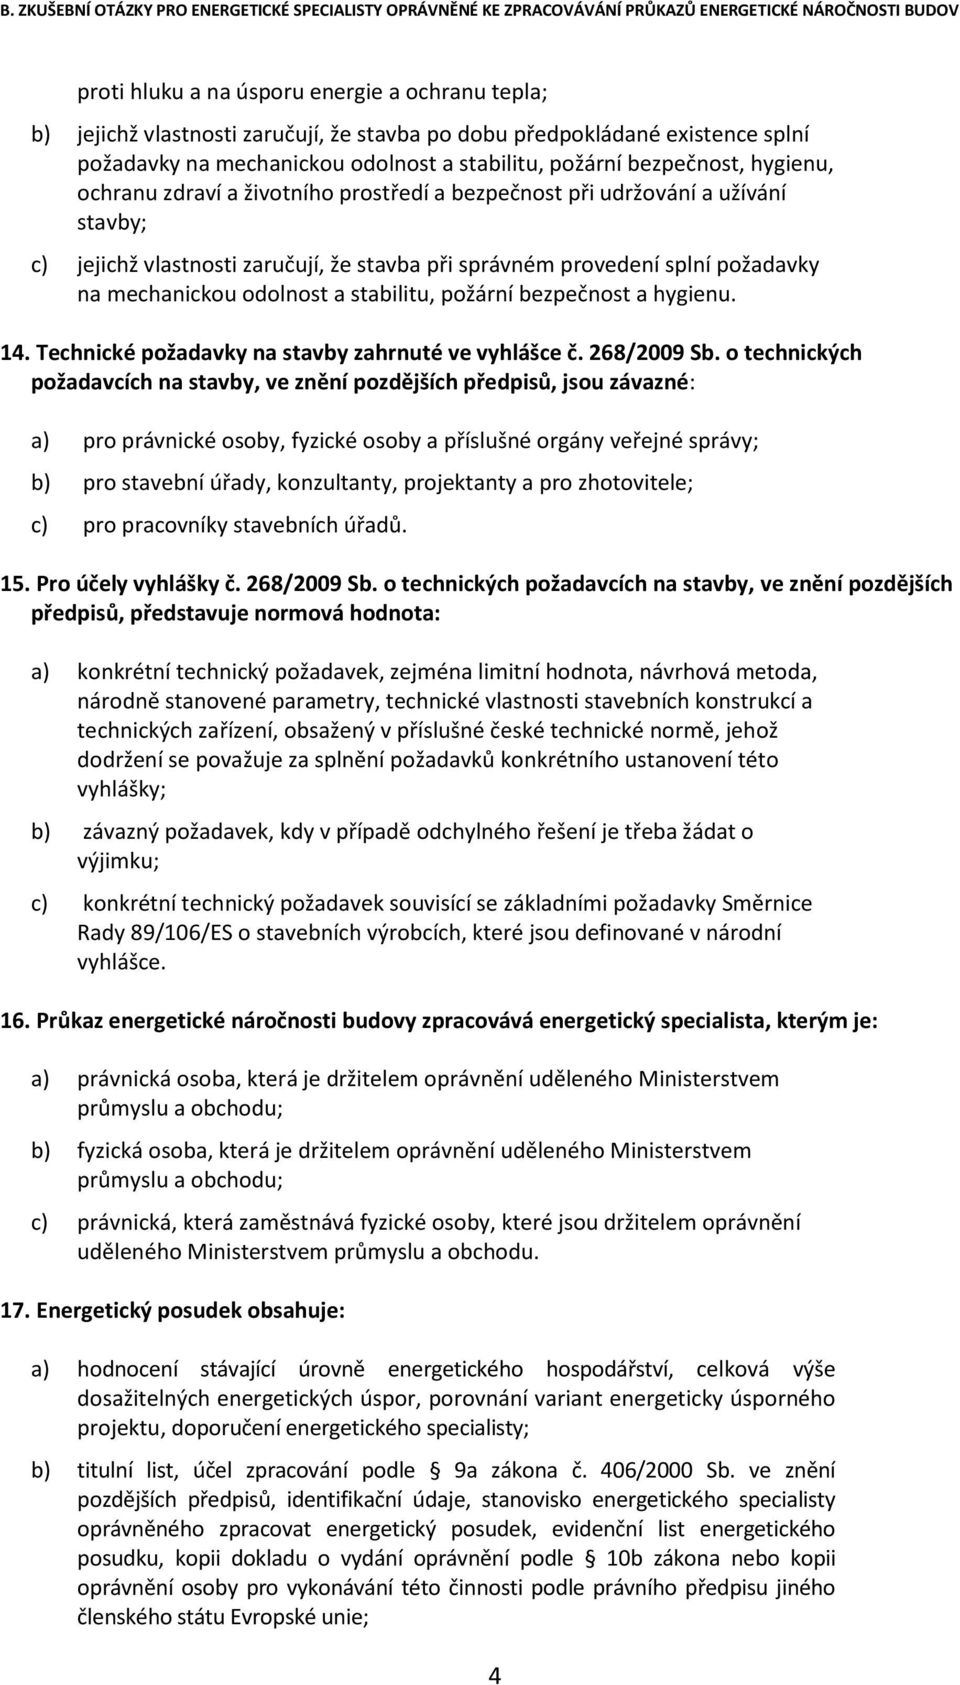 stabilitu, požární bezpečnost a hygienu. 14. Technické požadavky na stavby zahrnuté ve vyhlášce č. 268/2009 Sb.